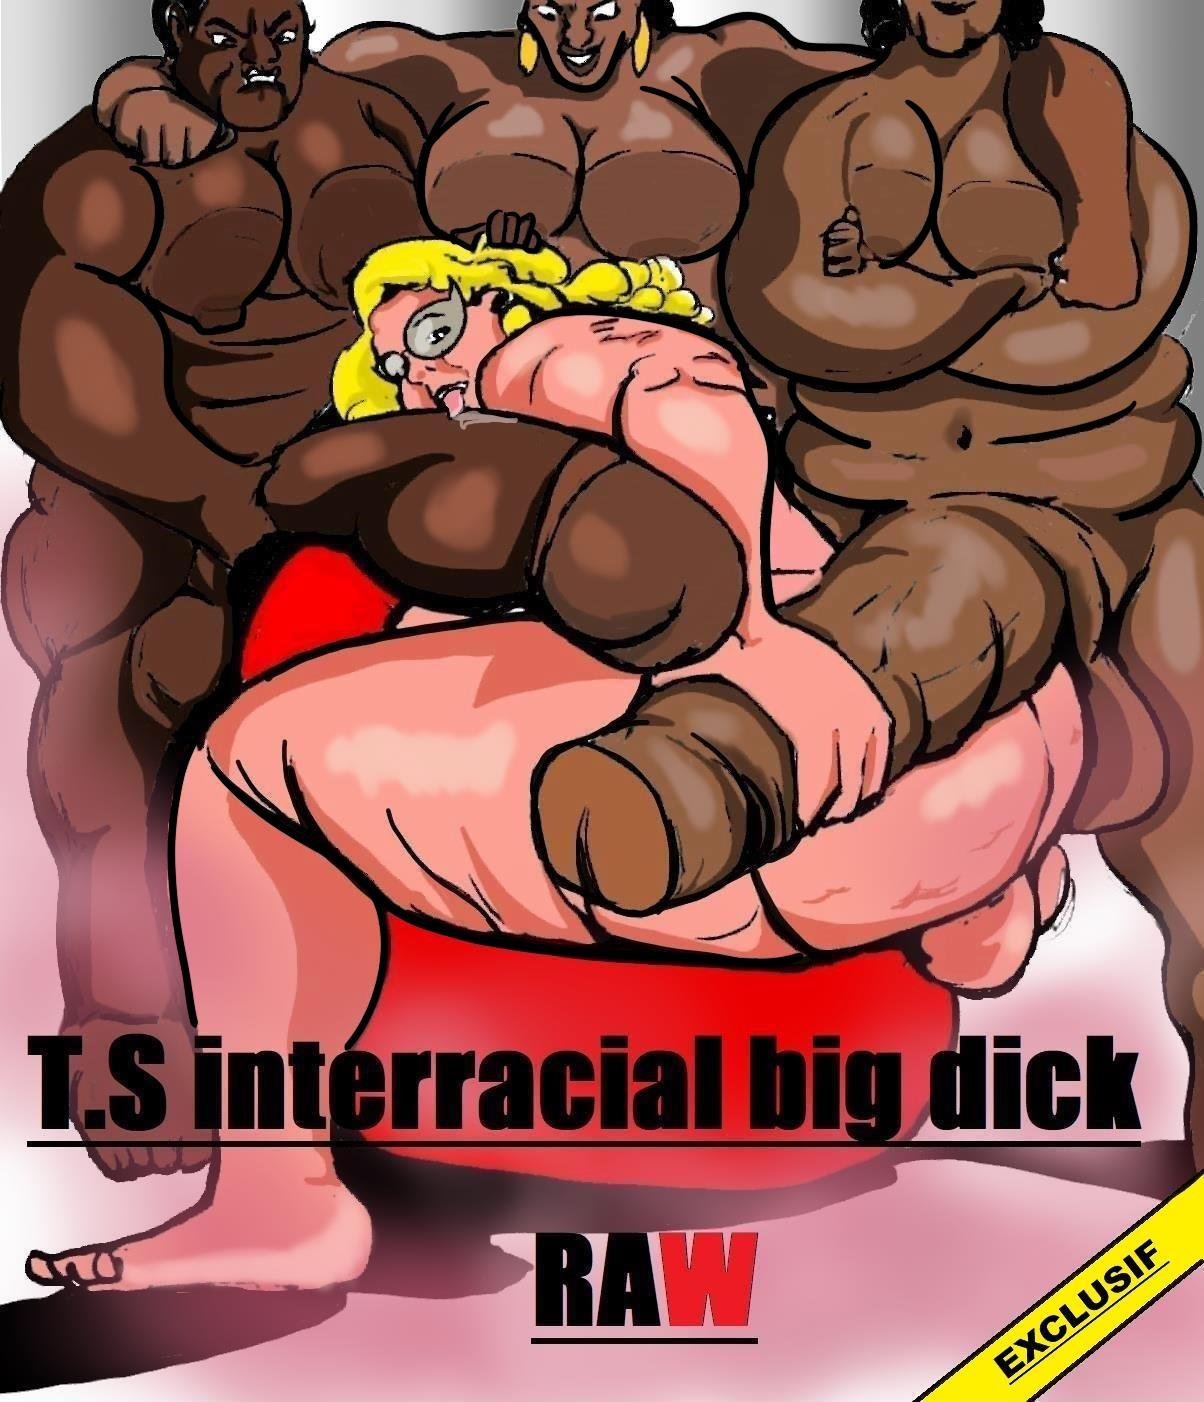 Huge Dick Shemale Cartoon - T.S Interracial big dick RAW Â» Porn comics free online